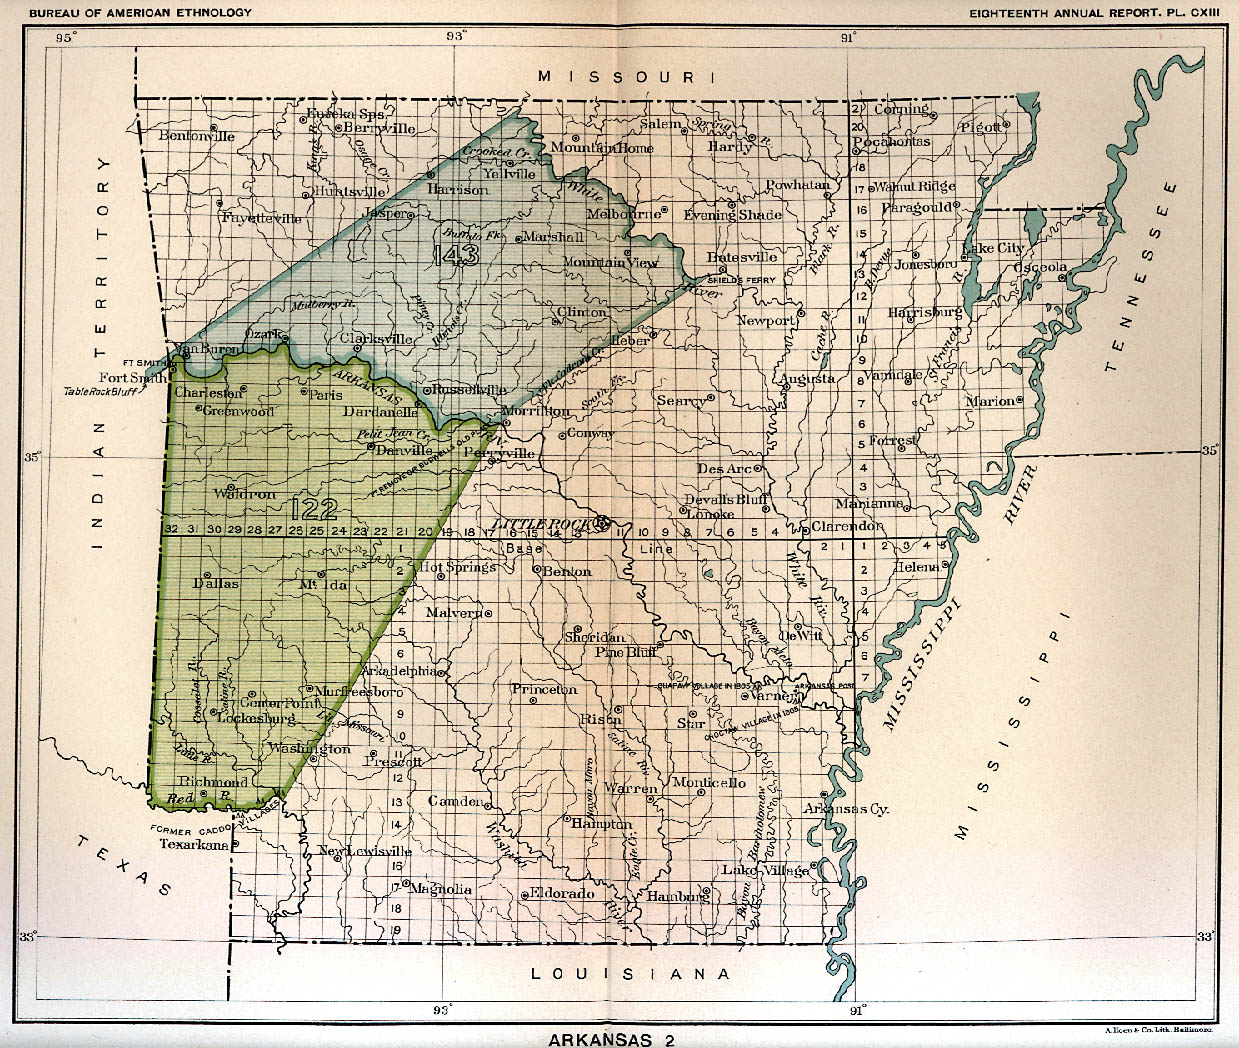 Arkansas 2, Map 6